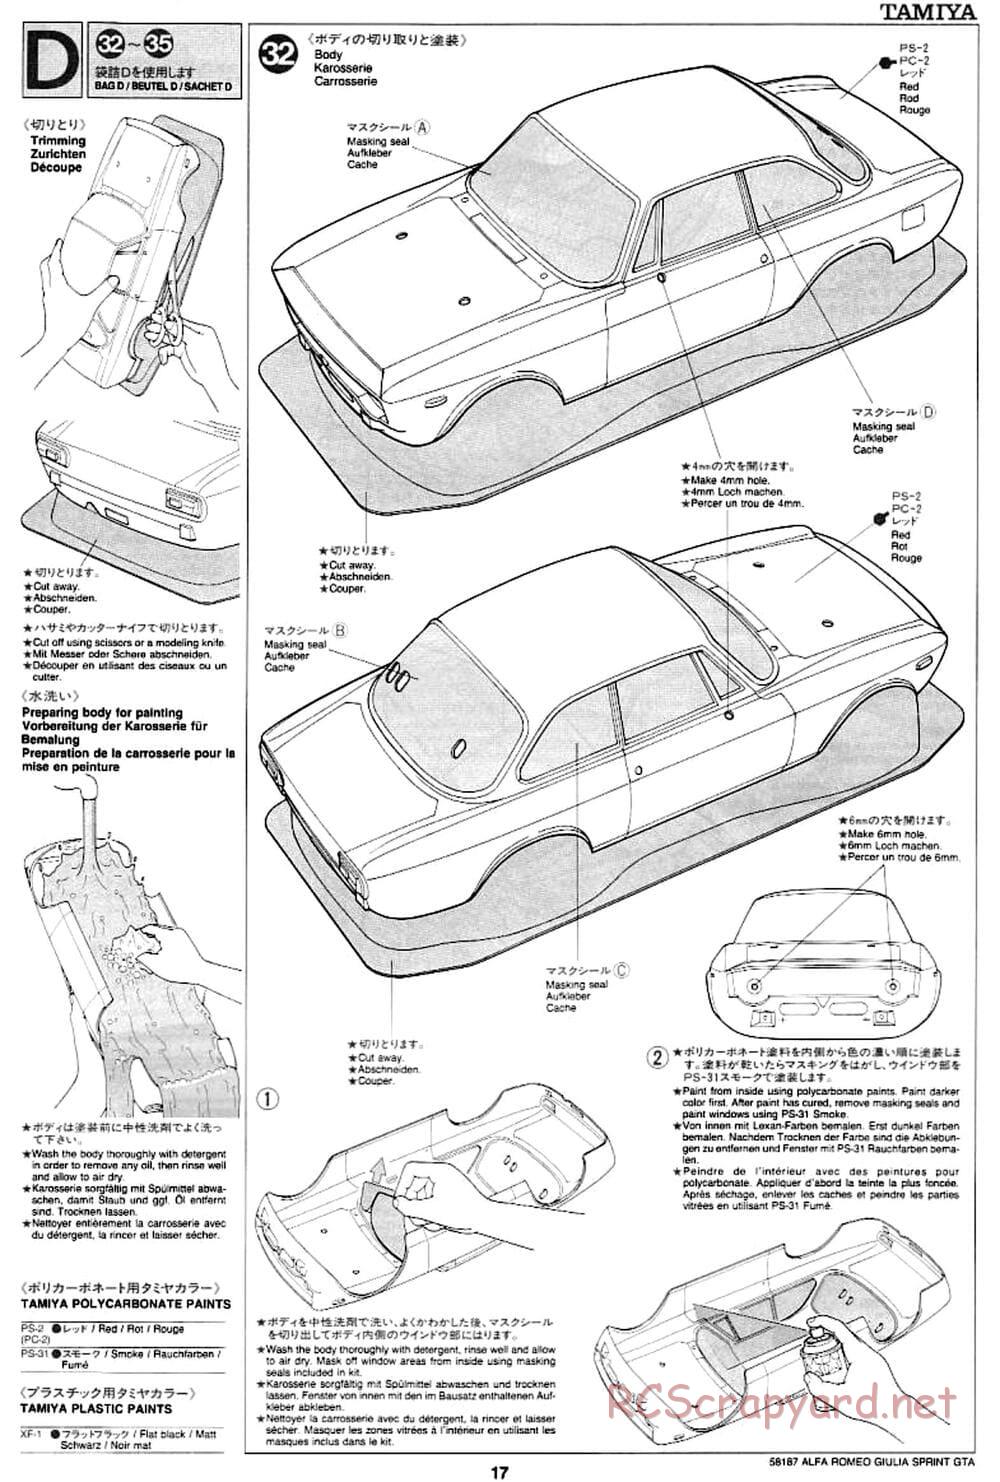 Tamiya - Alfa Romeo Giulia Sprint GTA - M02M Chassis - Manual - Page 17